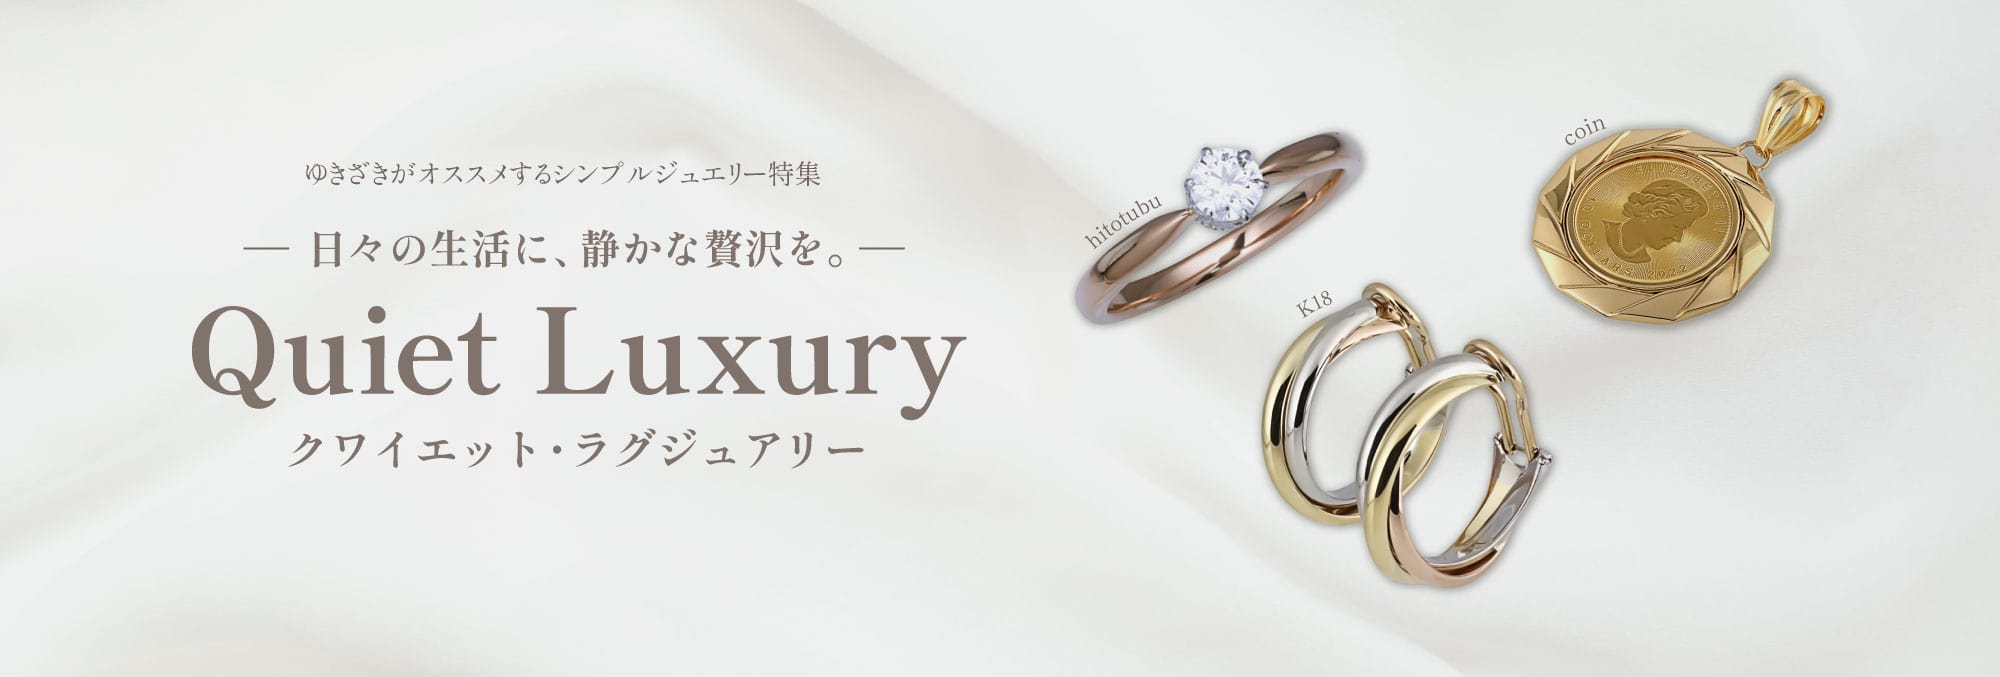 Bringing quiet luxury to your daily life. Quiet Luxury